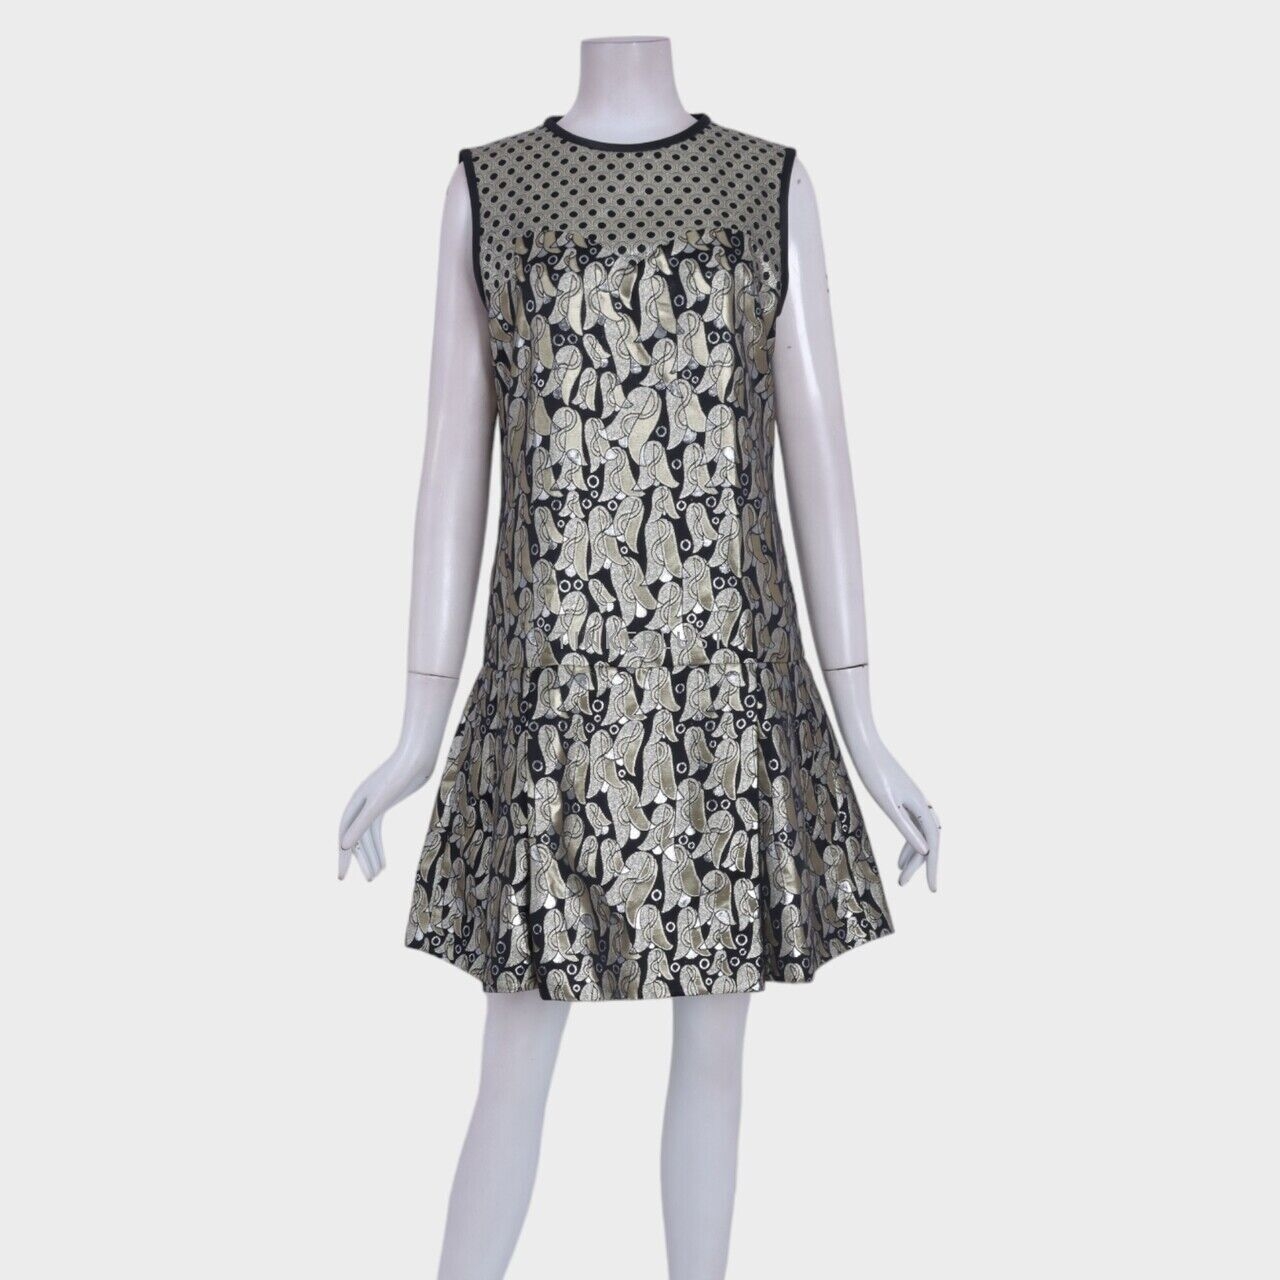 Victoria Beckham Gold & Black Sleeveless Mini Dress